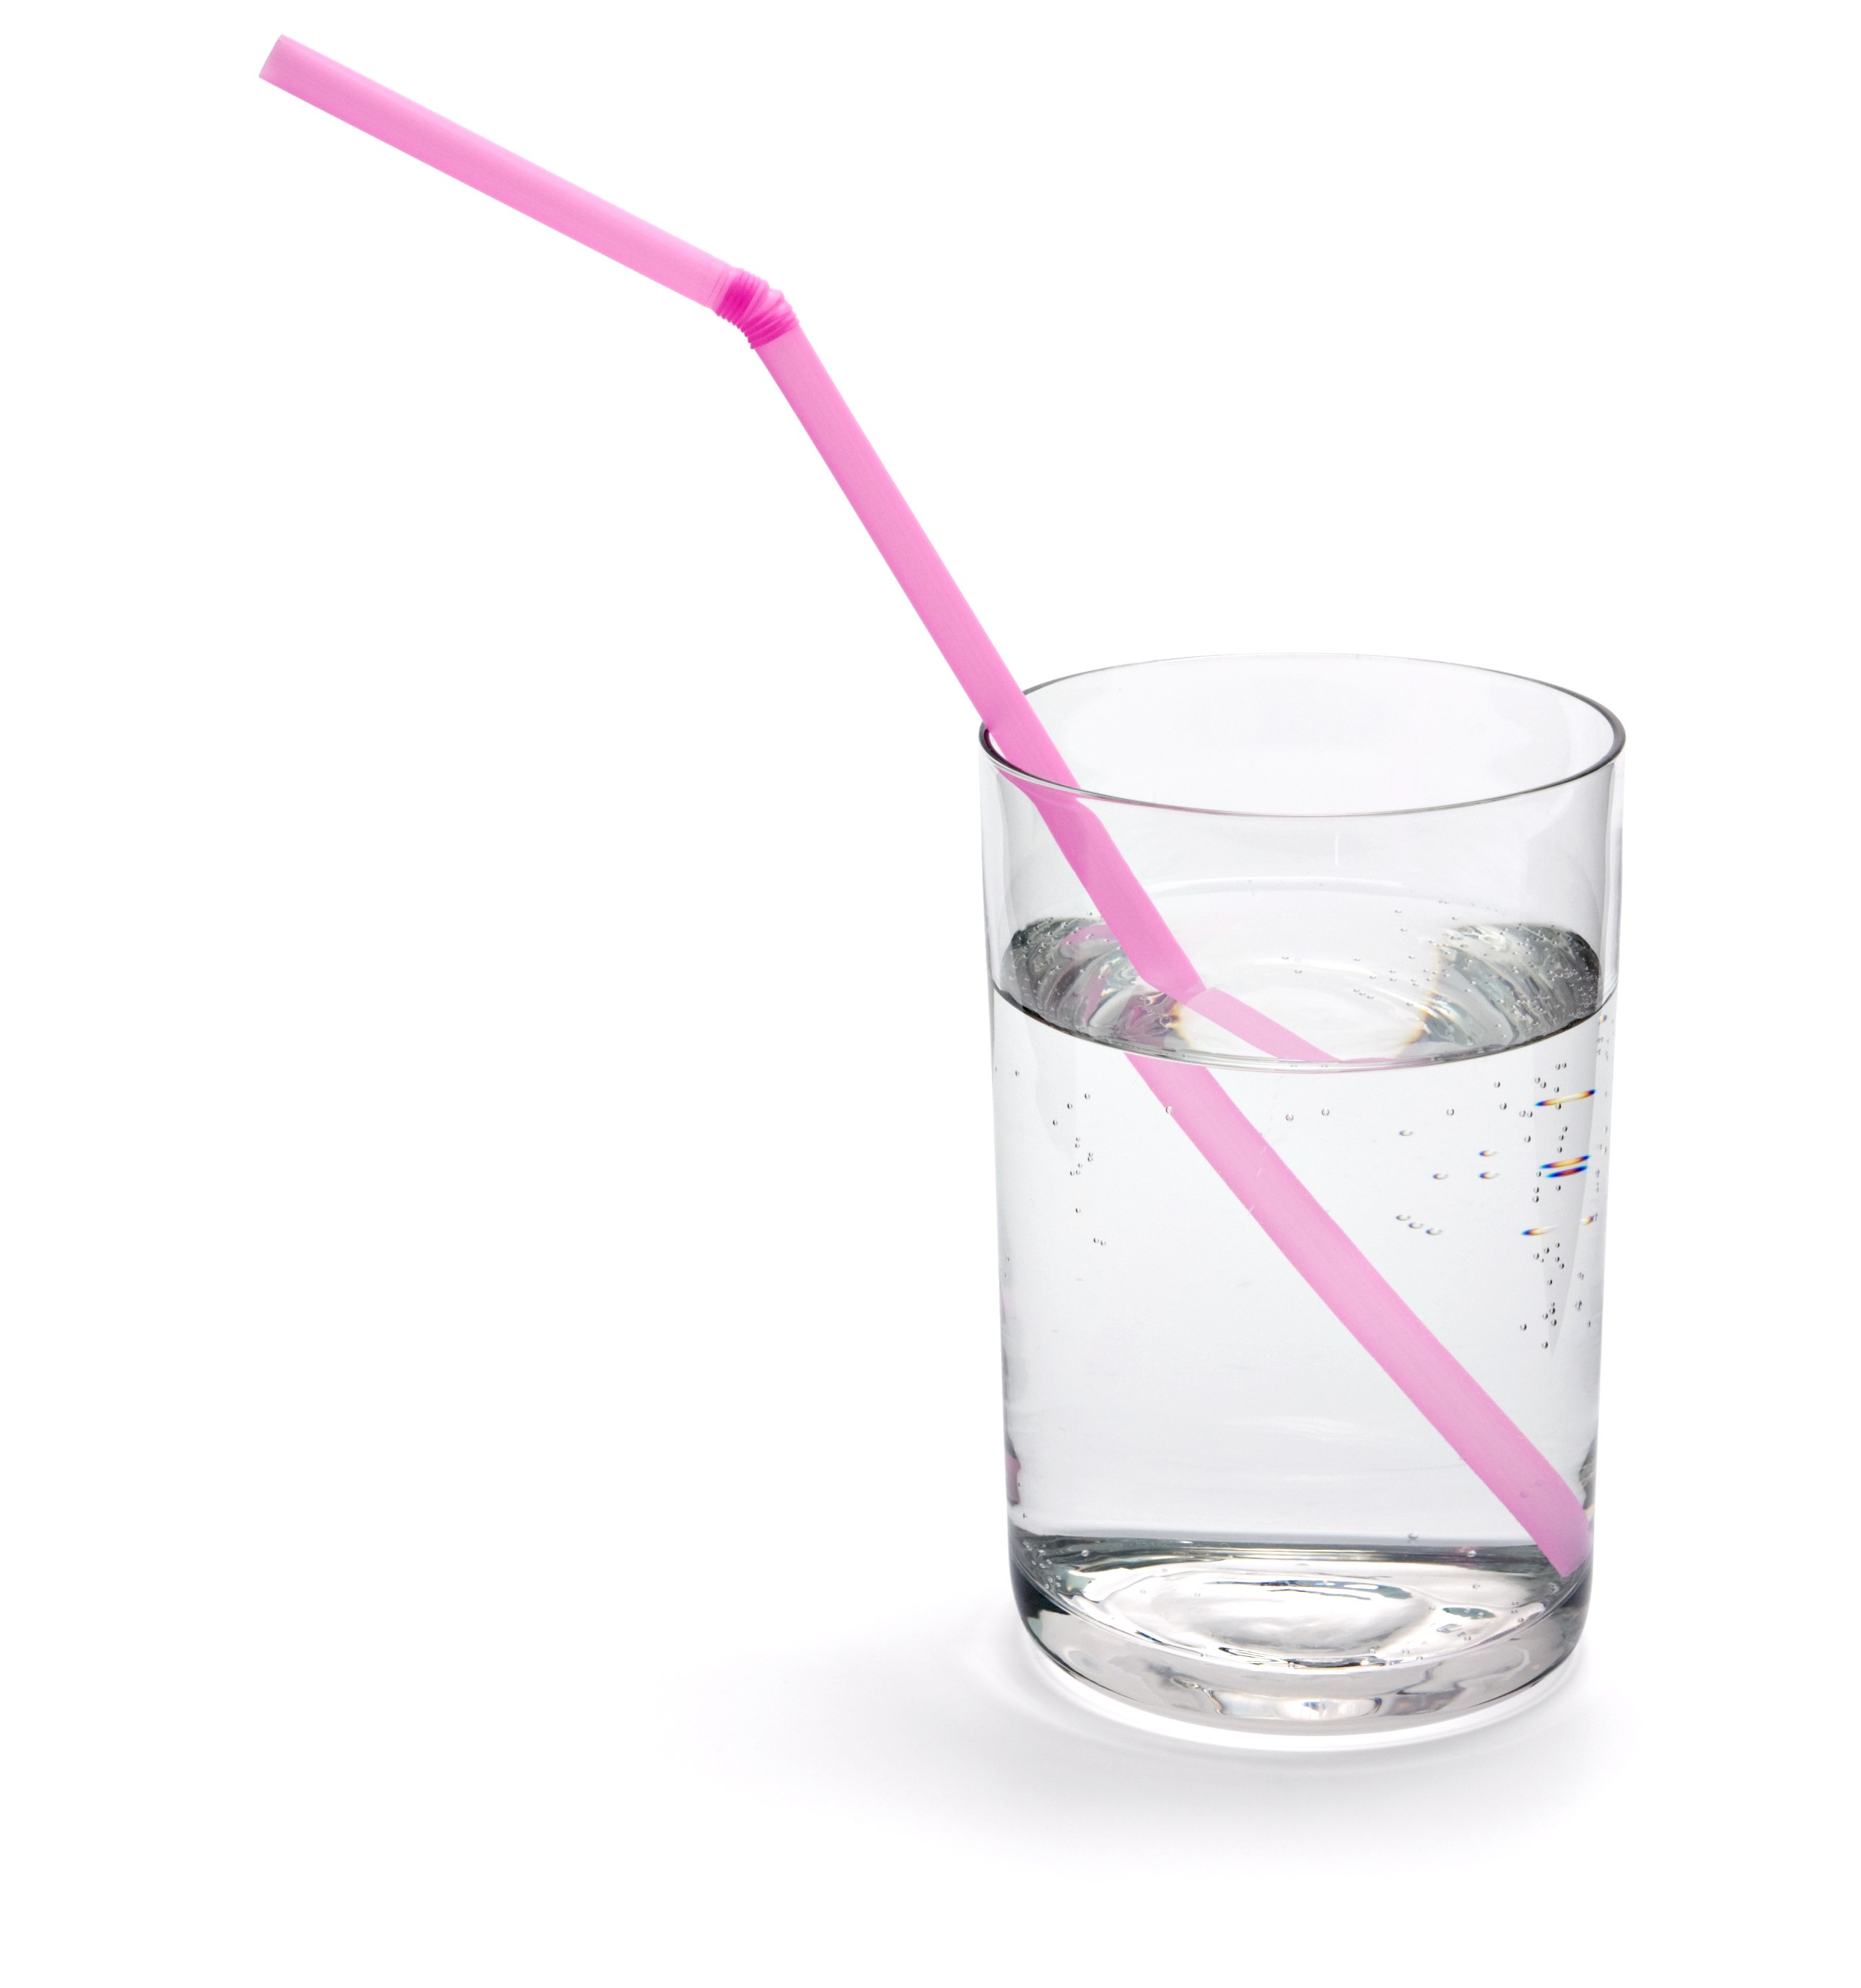 Straw in Liquid